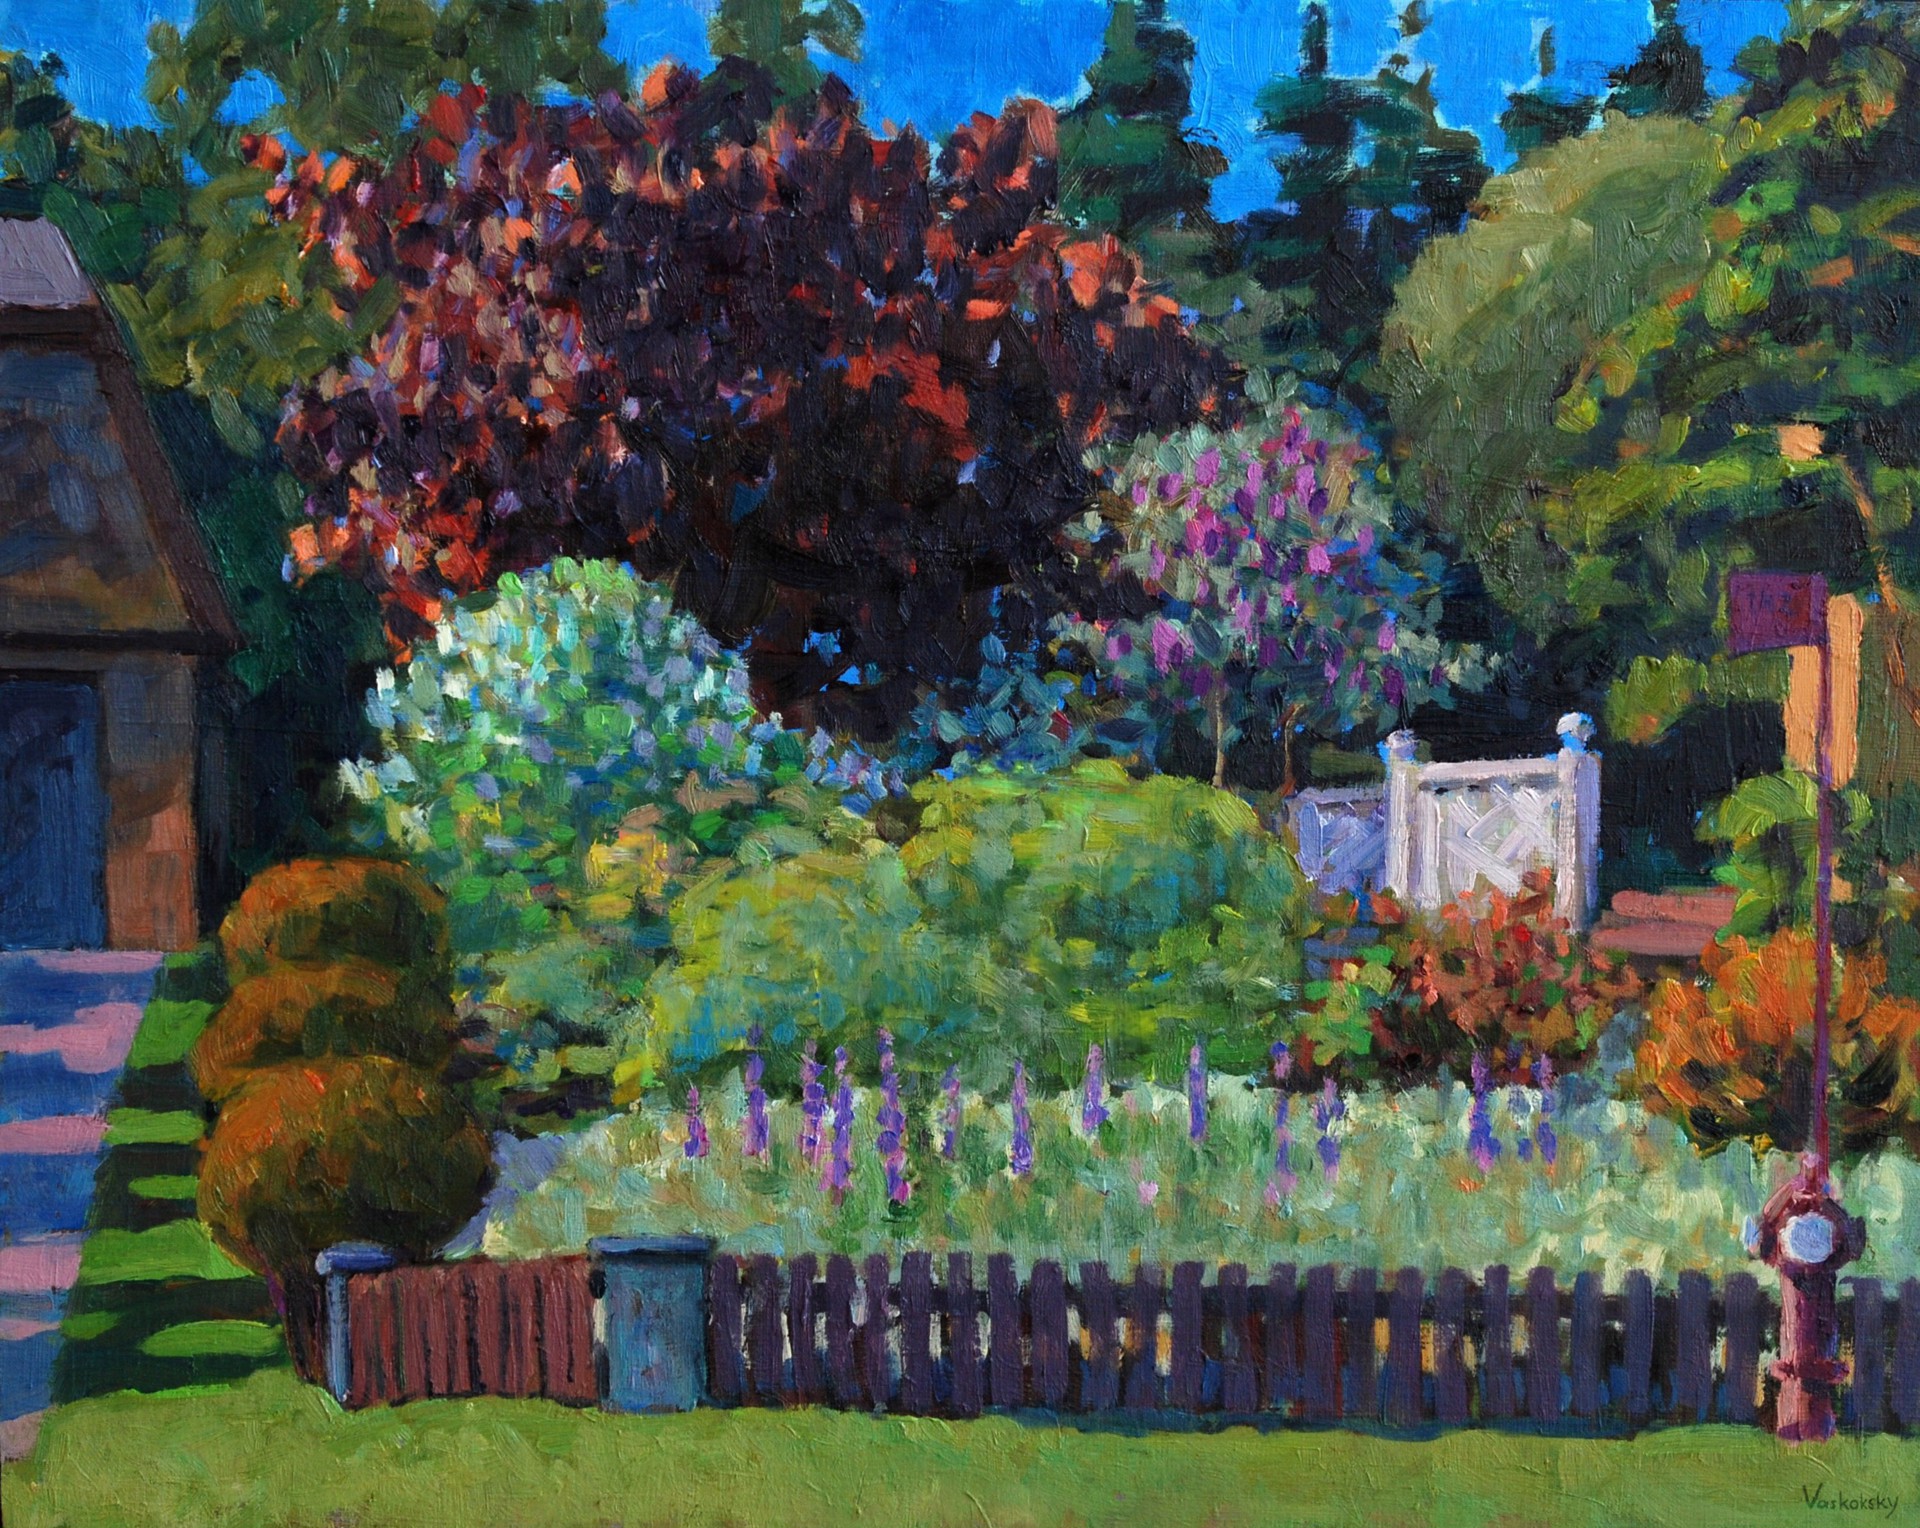 Tom's Garden by Vadim Vaskovsky